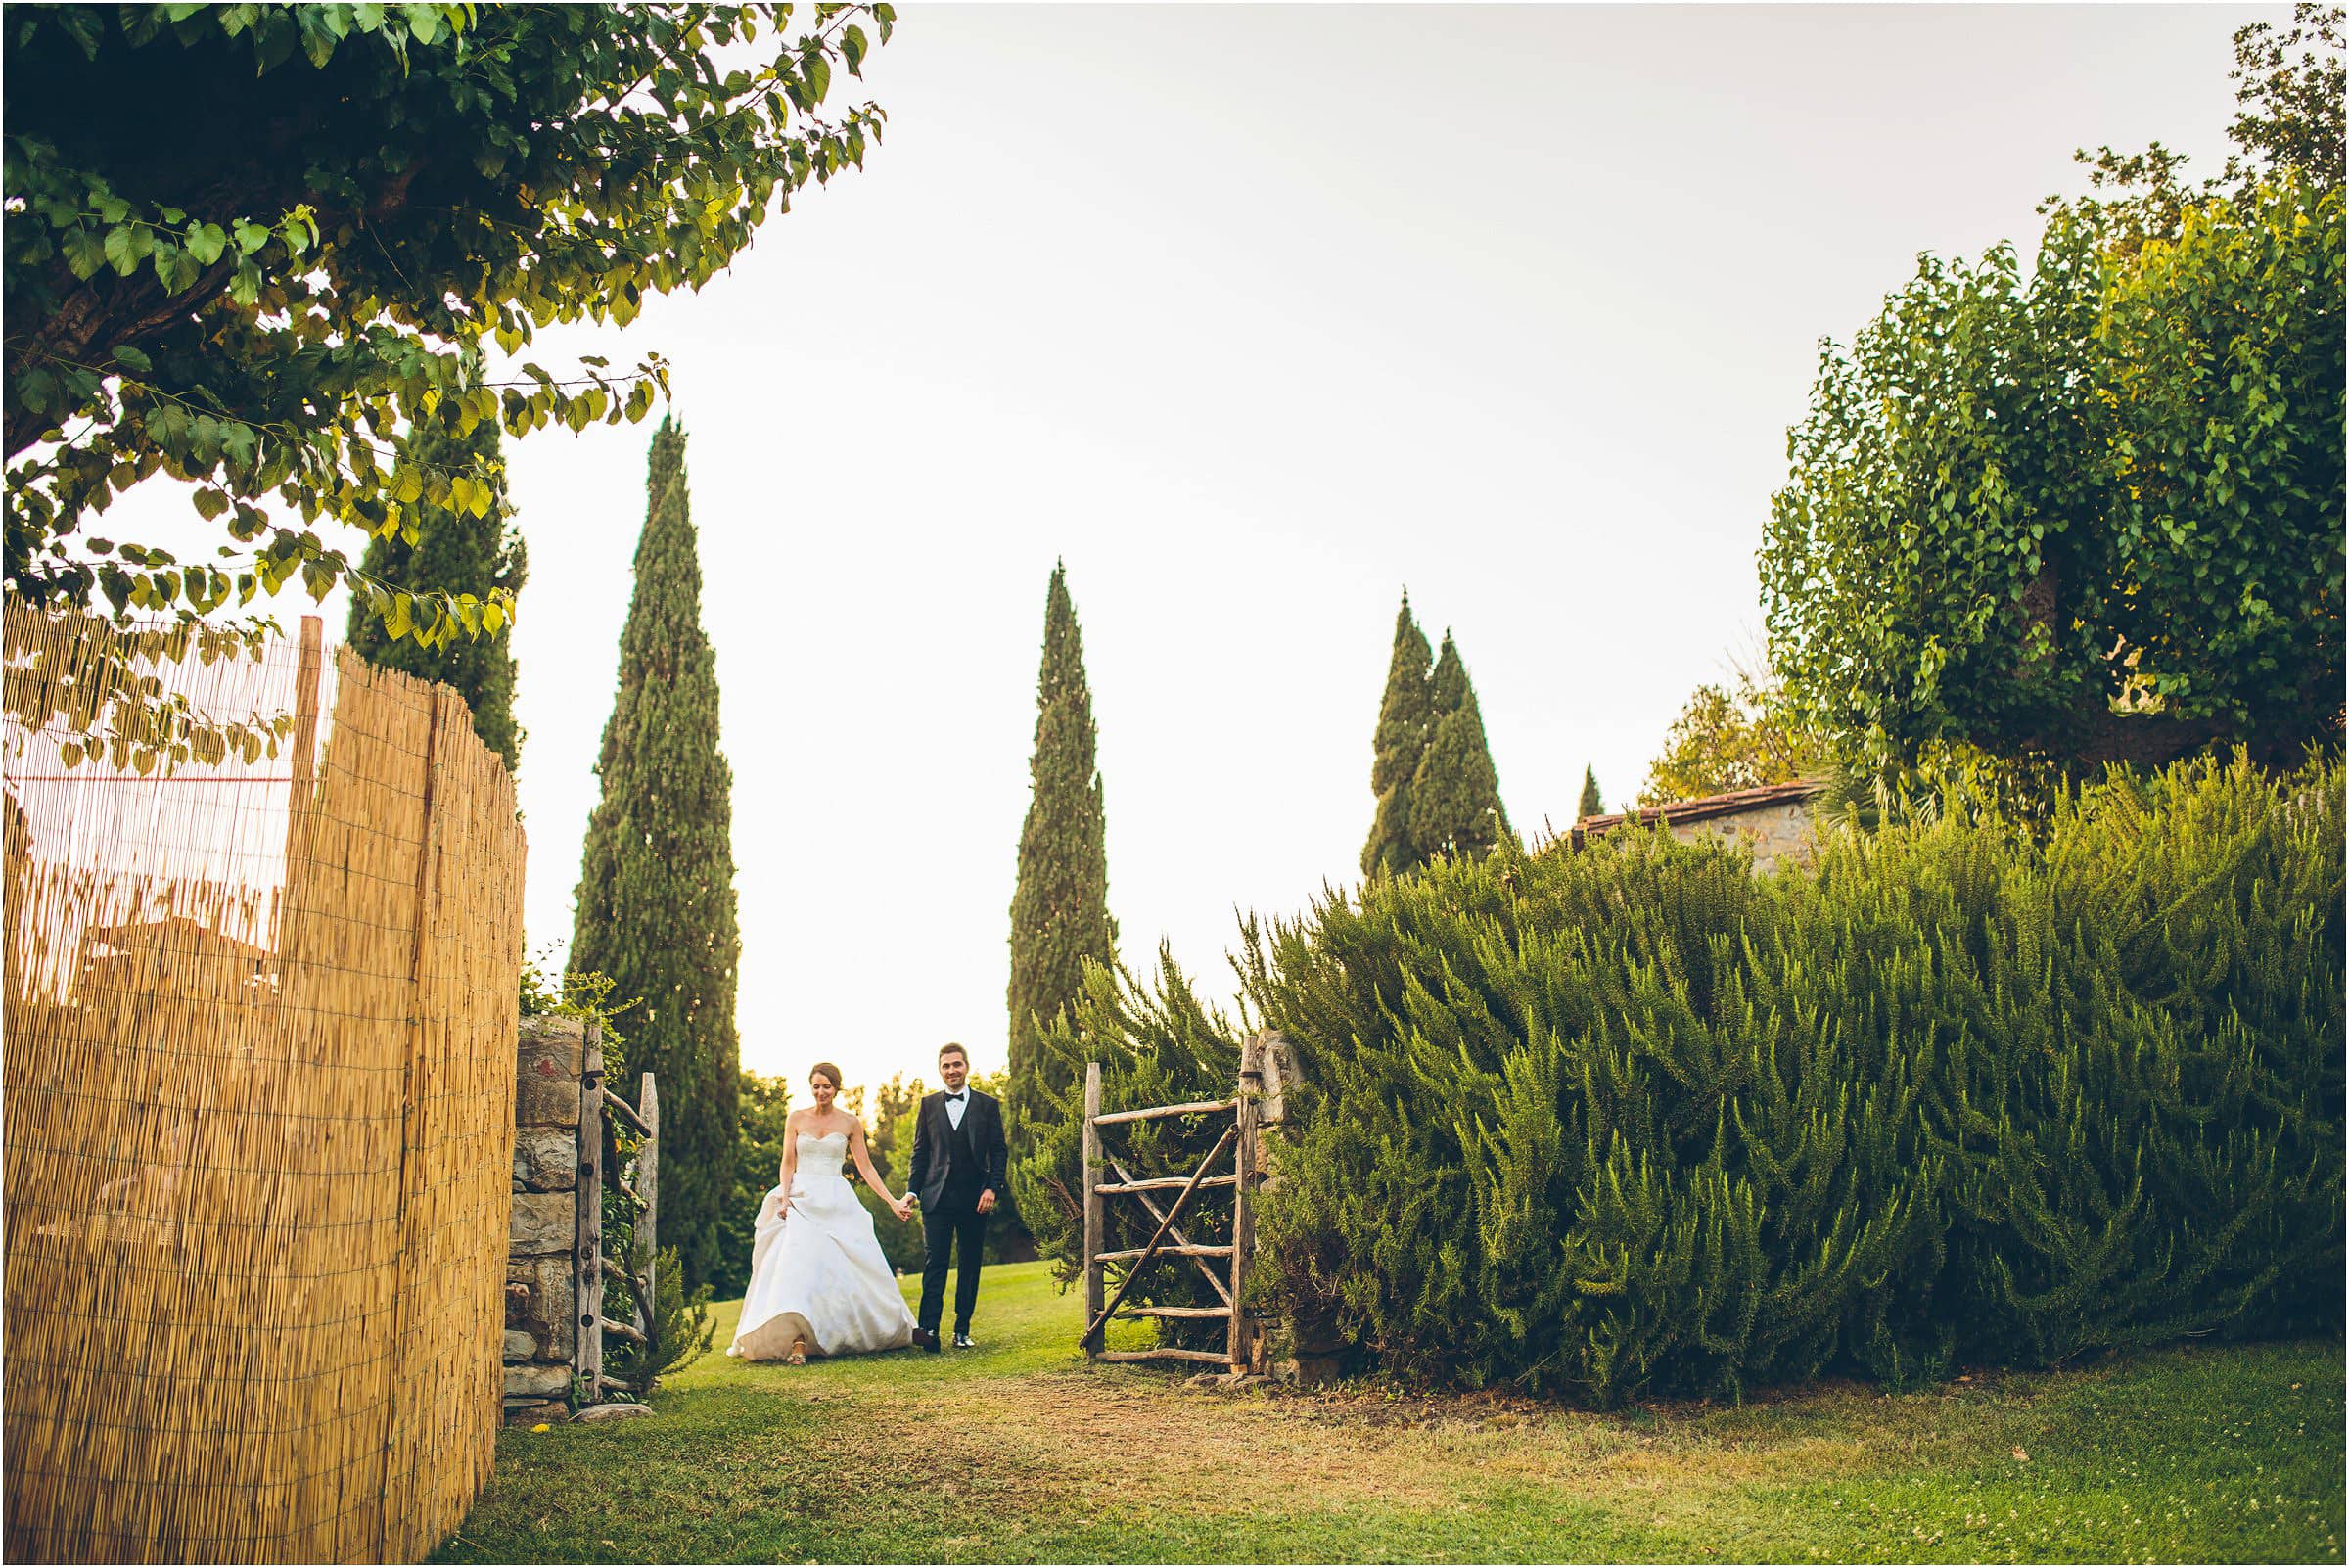 The bride and groom walk through a gate at Castello di Vicarello in Tuscany